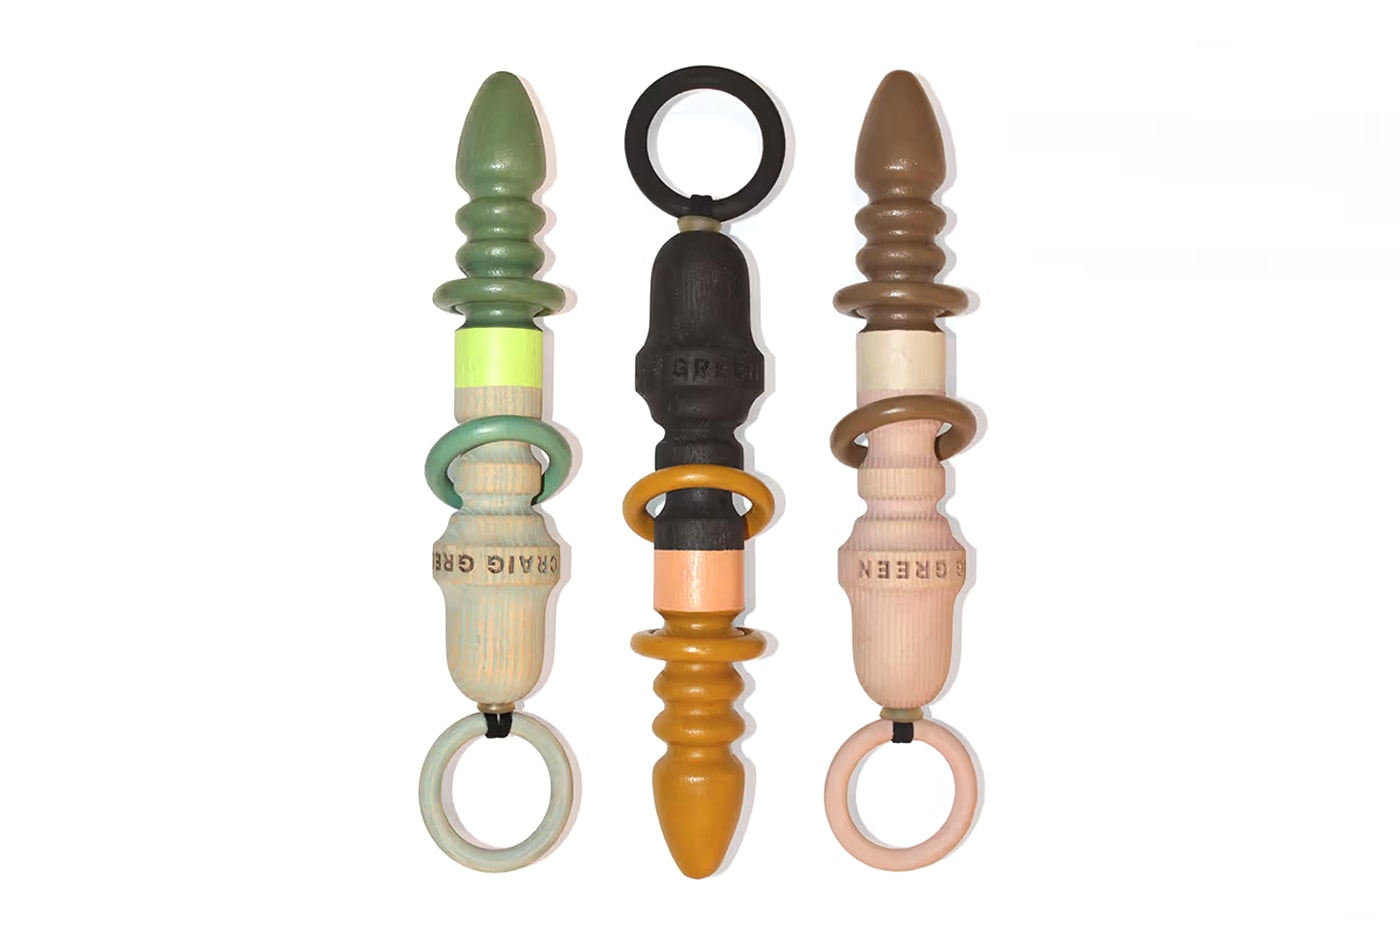 Craig Green Drops Limited Edition "Jumbo Wooden Tools" sex toy butt plug dsm dover street market london